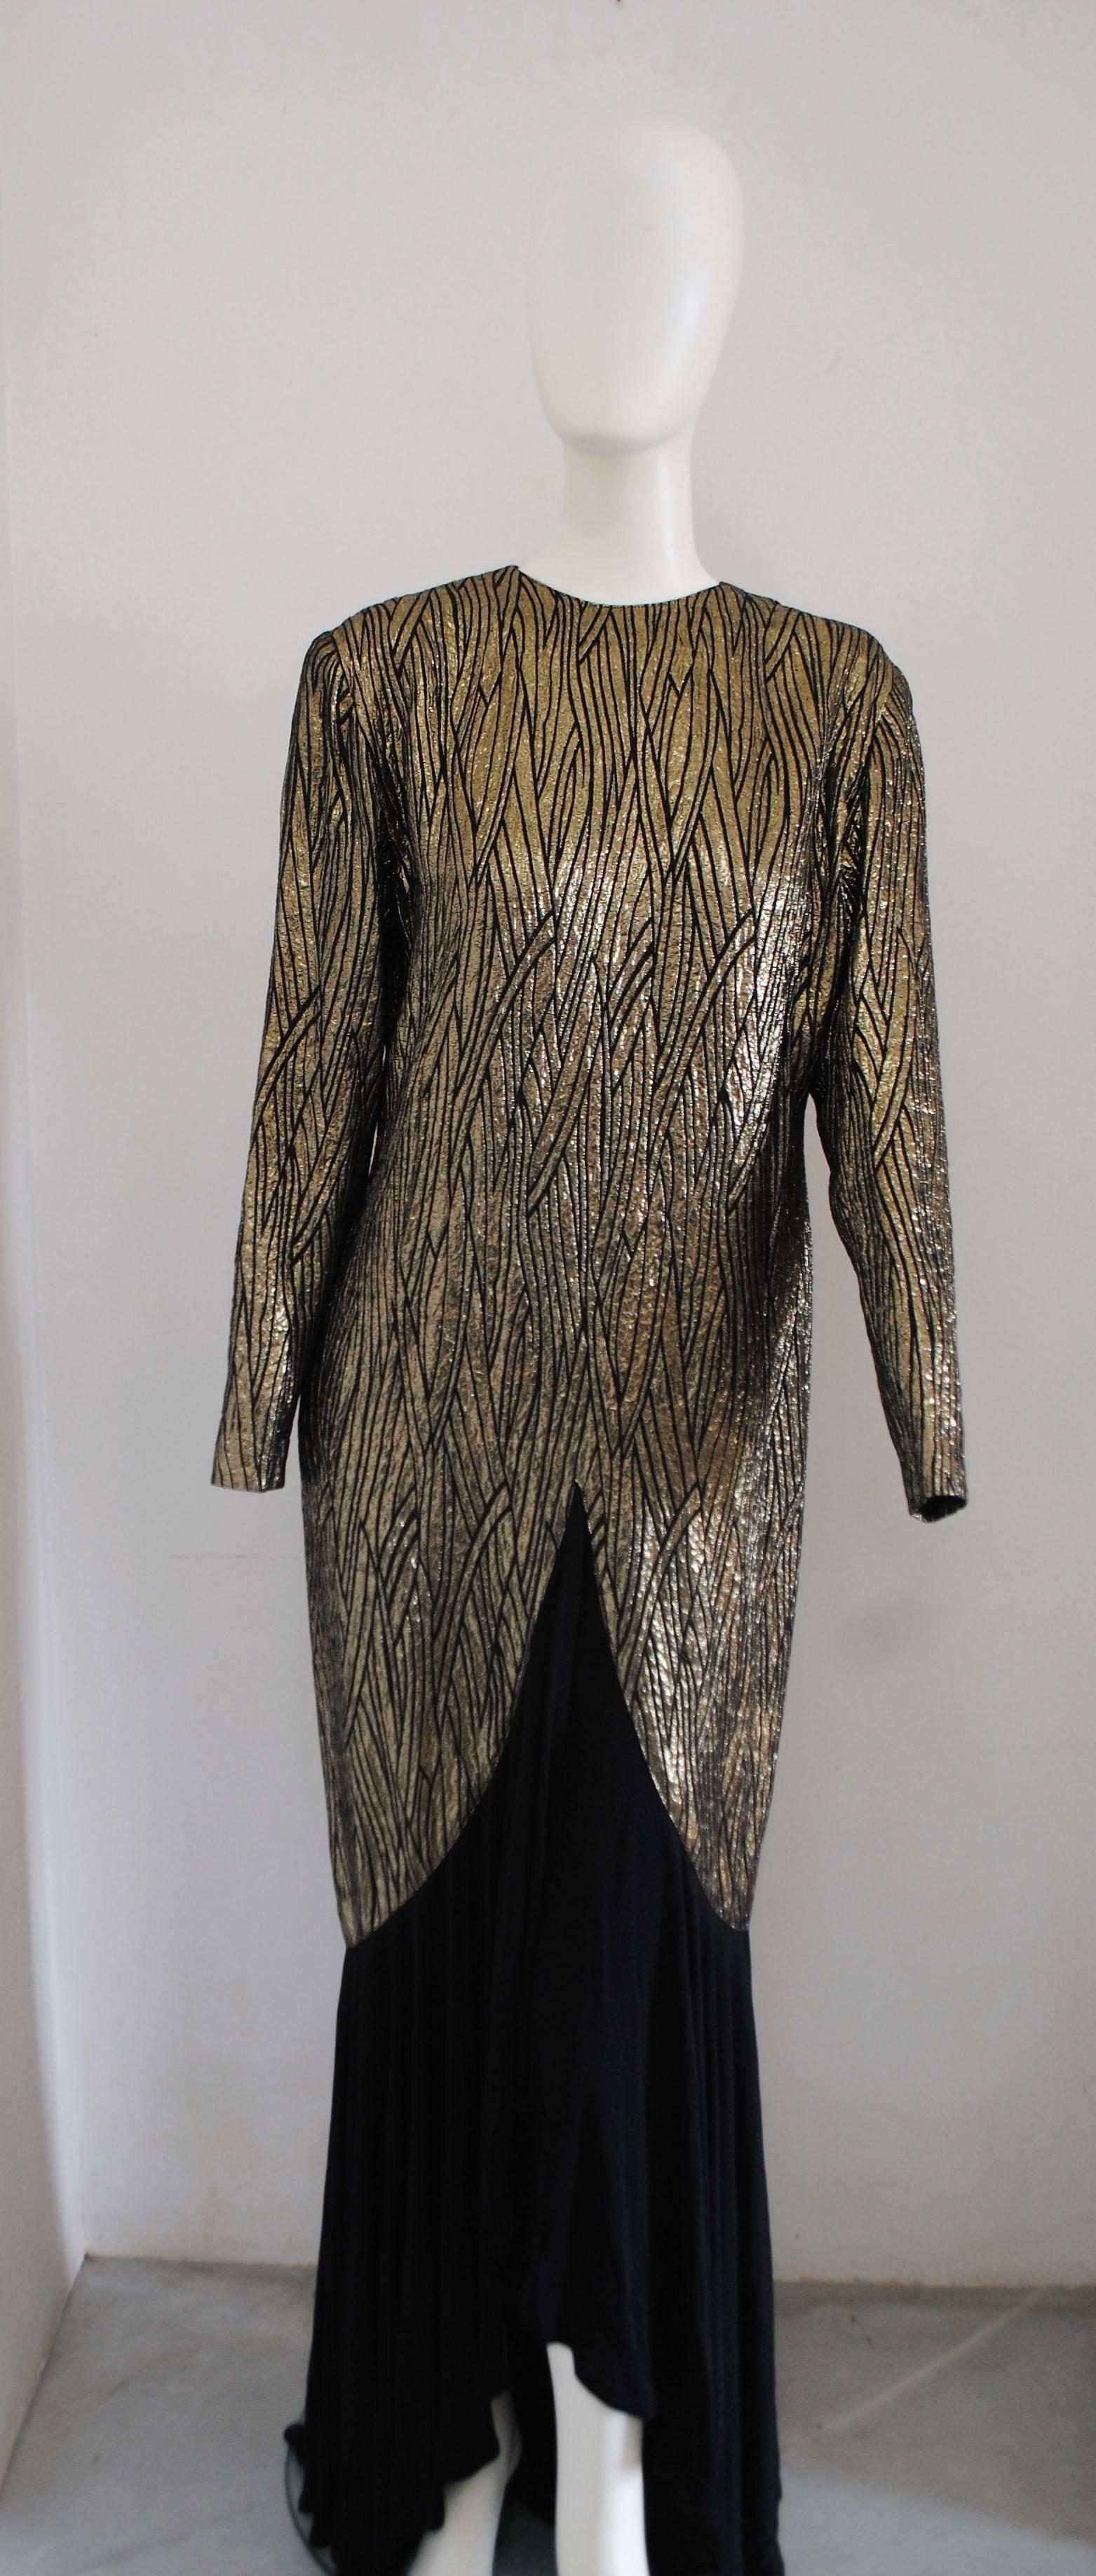 1990s Annalisa Ferro Gold Black Long Dress

Gold and black long dress totally made in italy in italian size range 42

Composition: Acrylic / Viscose